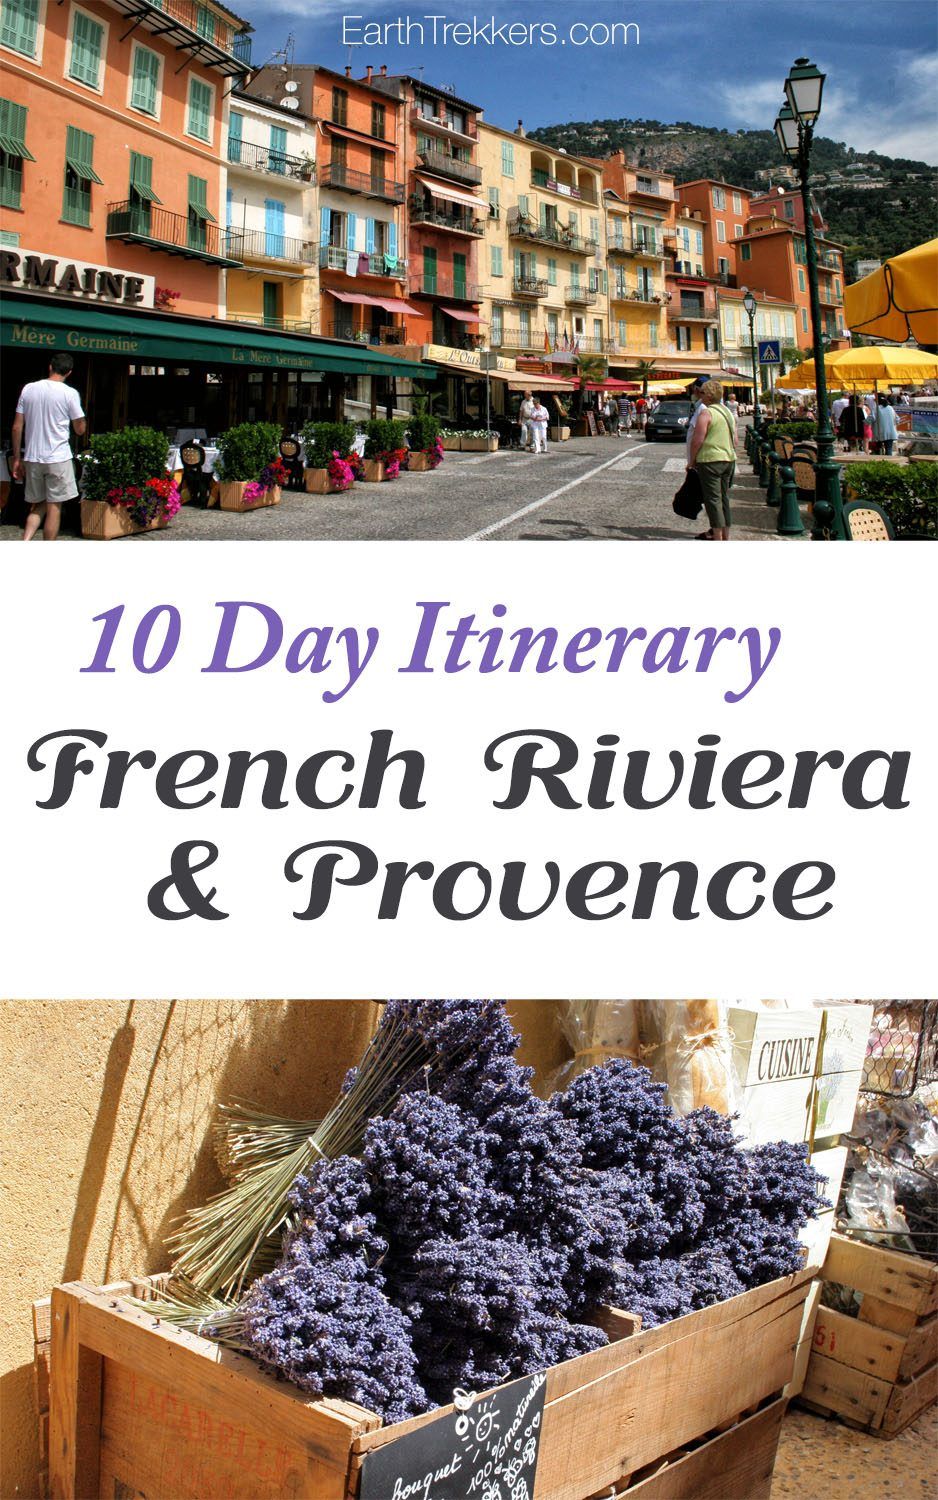 French Riviera Provence 10 Day Itinerary